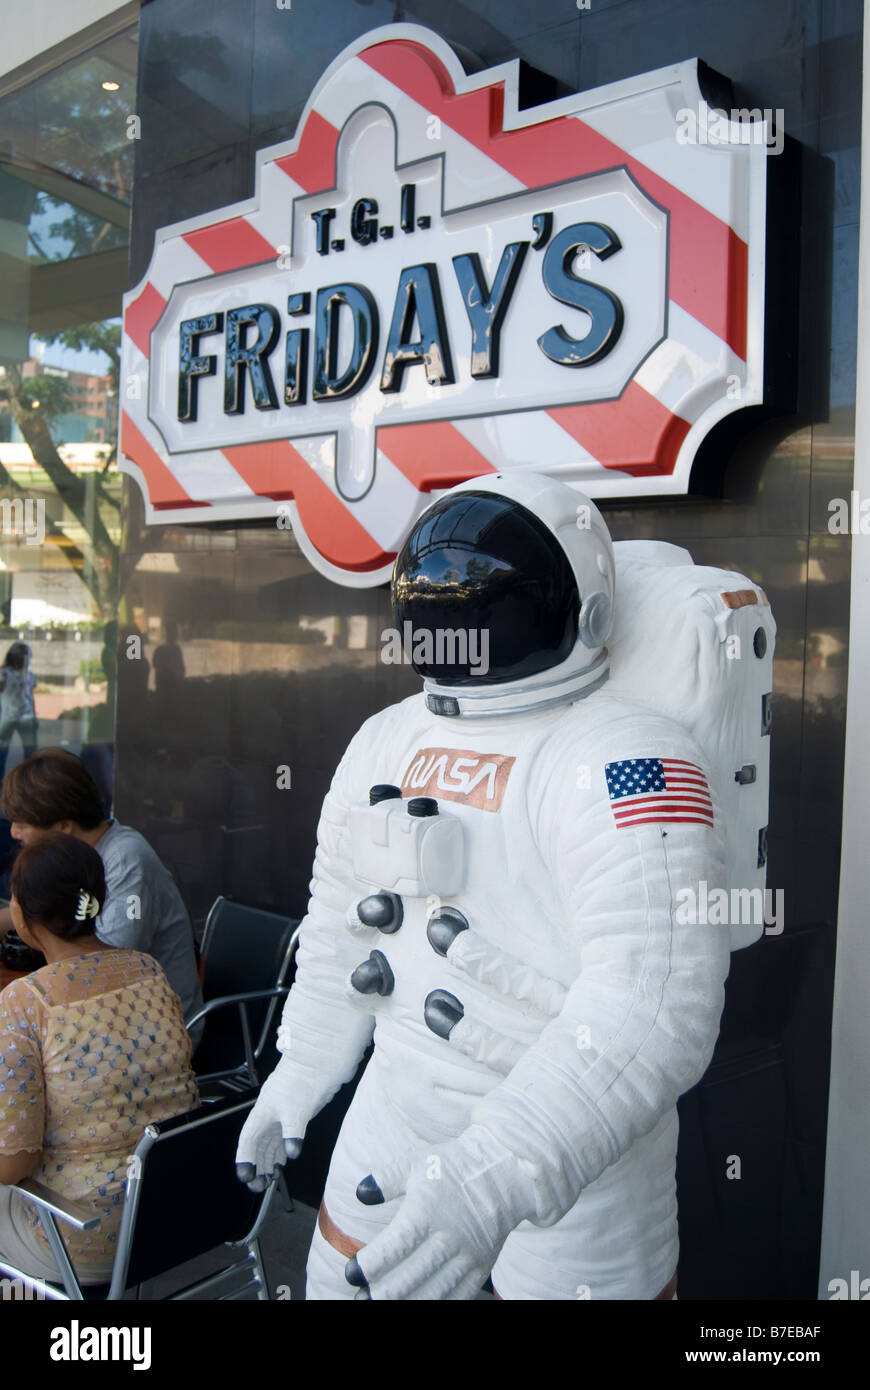 NASA Astronaut figure, TGI Fridays restaurant entrance, Ayala Shopping Mall, Cebu City, Cebu, Visayas, Philippines Stock Photo